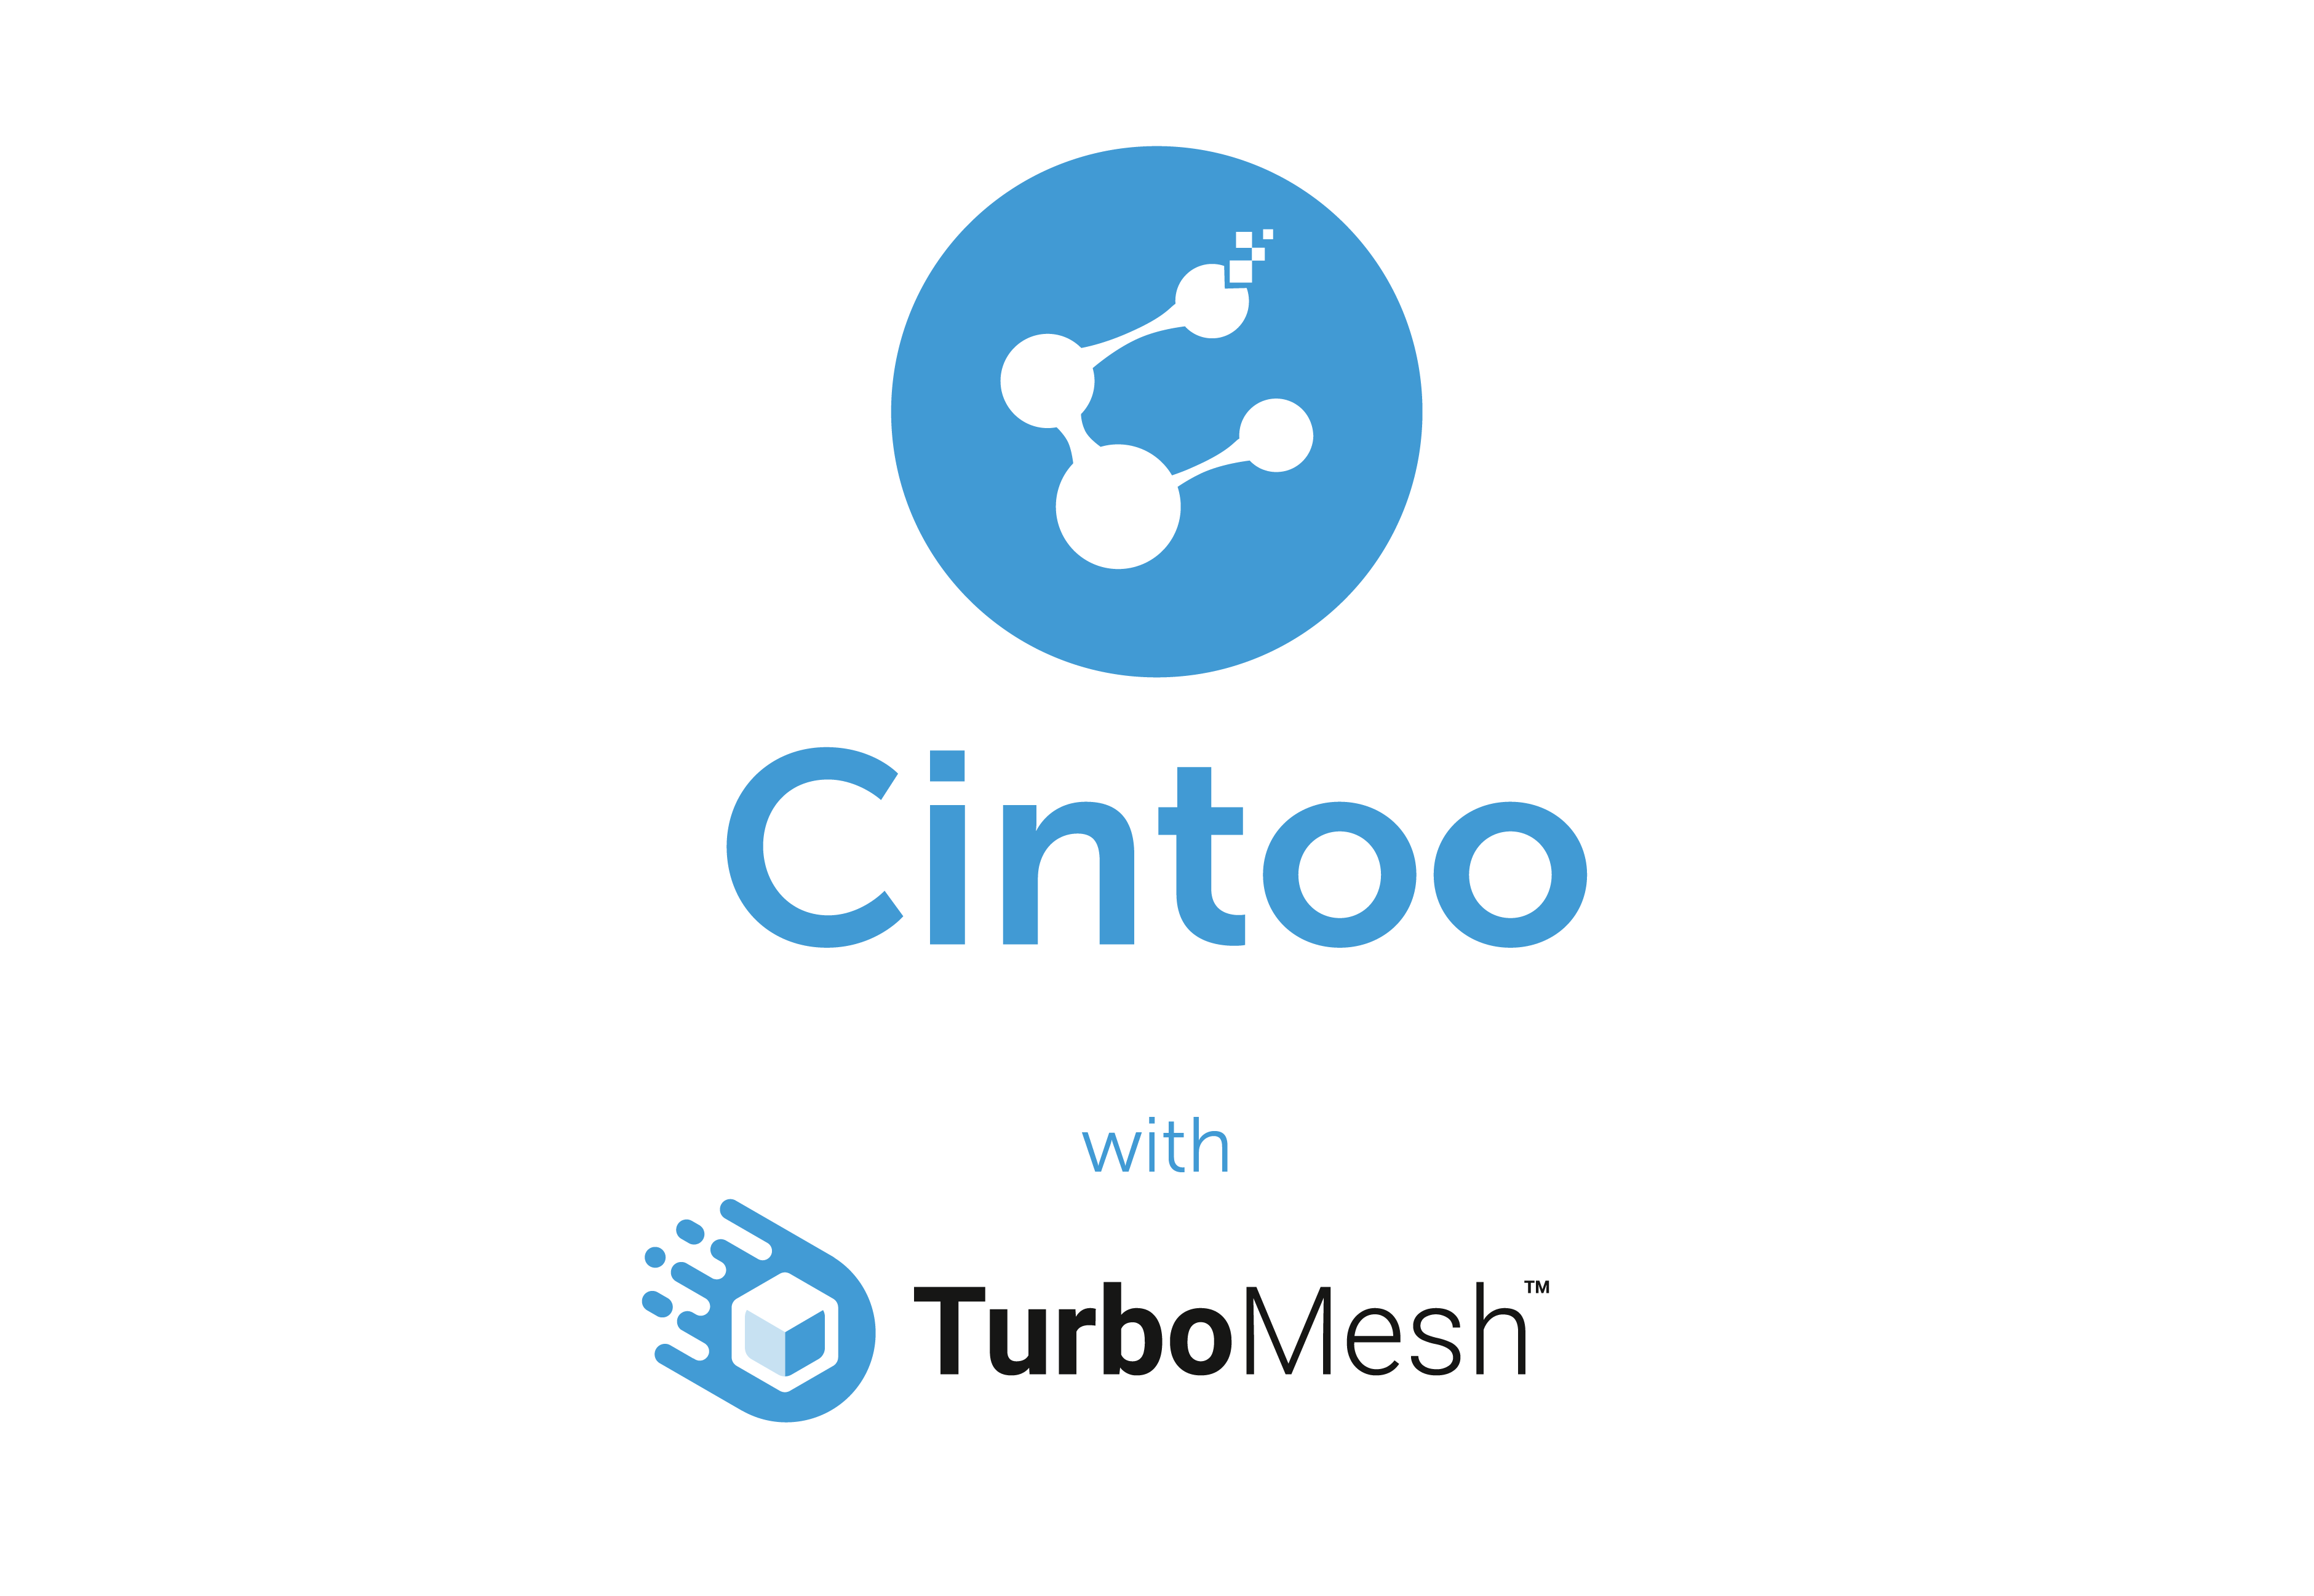 Cintoo with TurboMesh logo